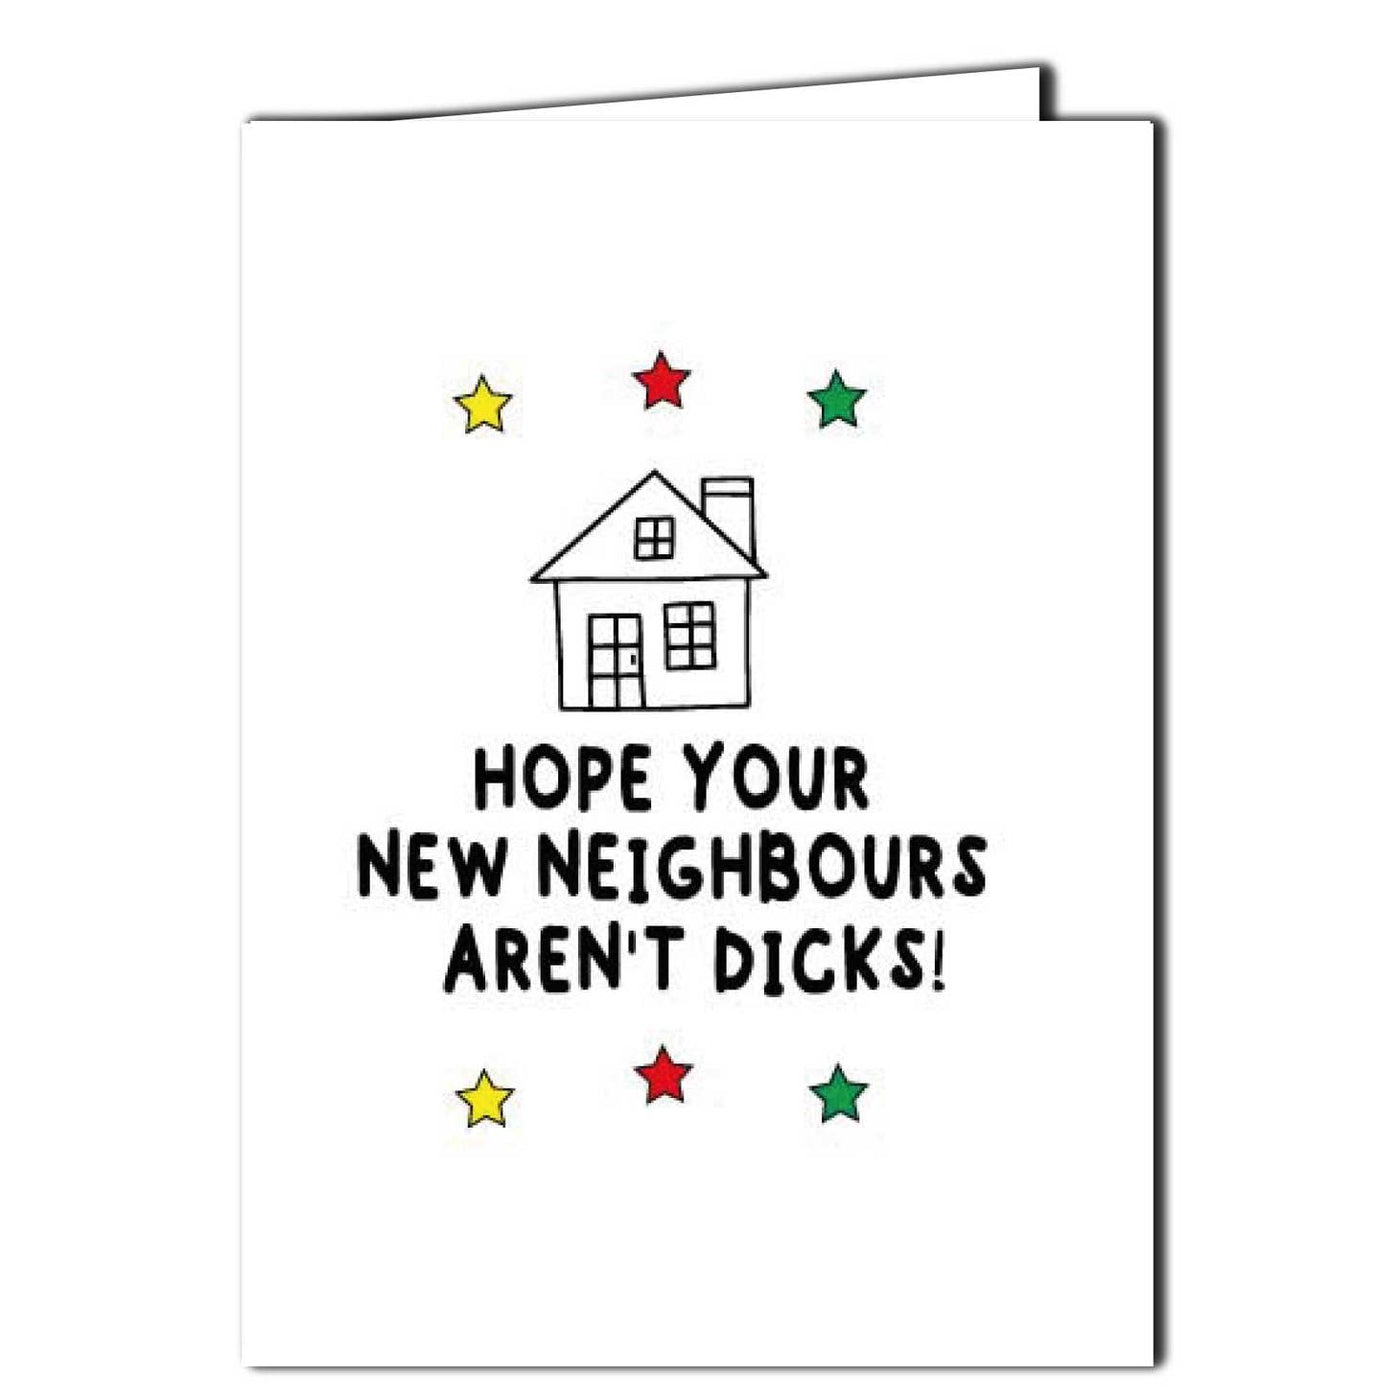 Hope Your New Neighbors Aren't D*cks Greeting Card